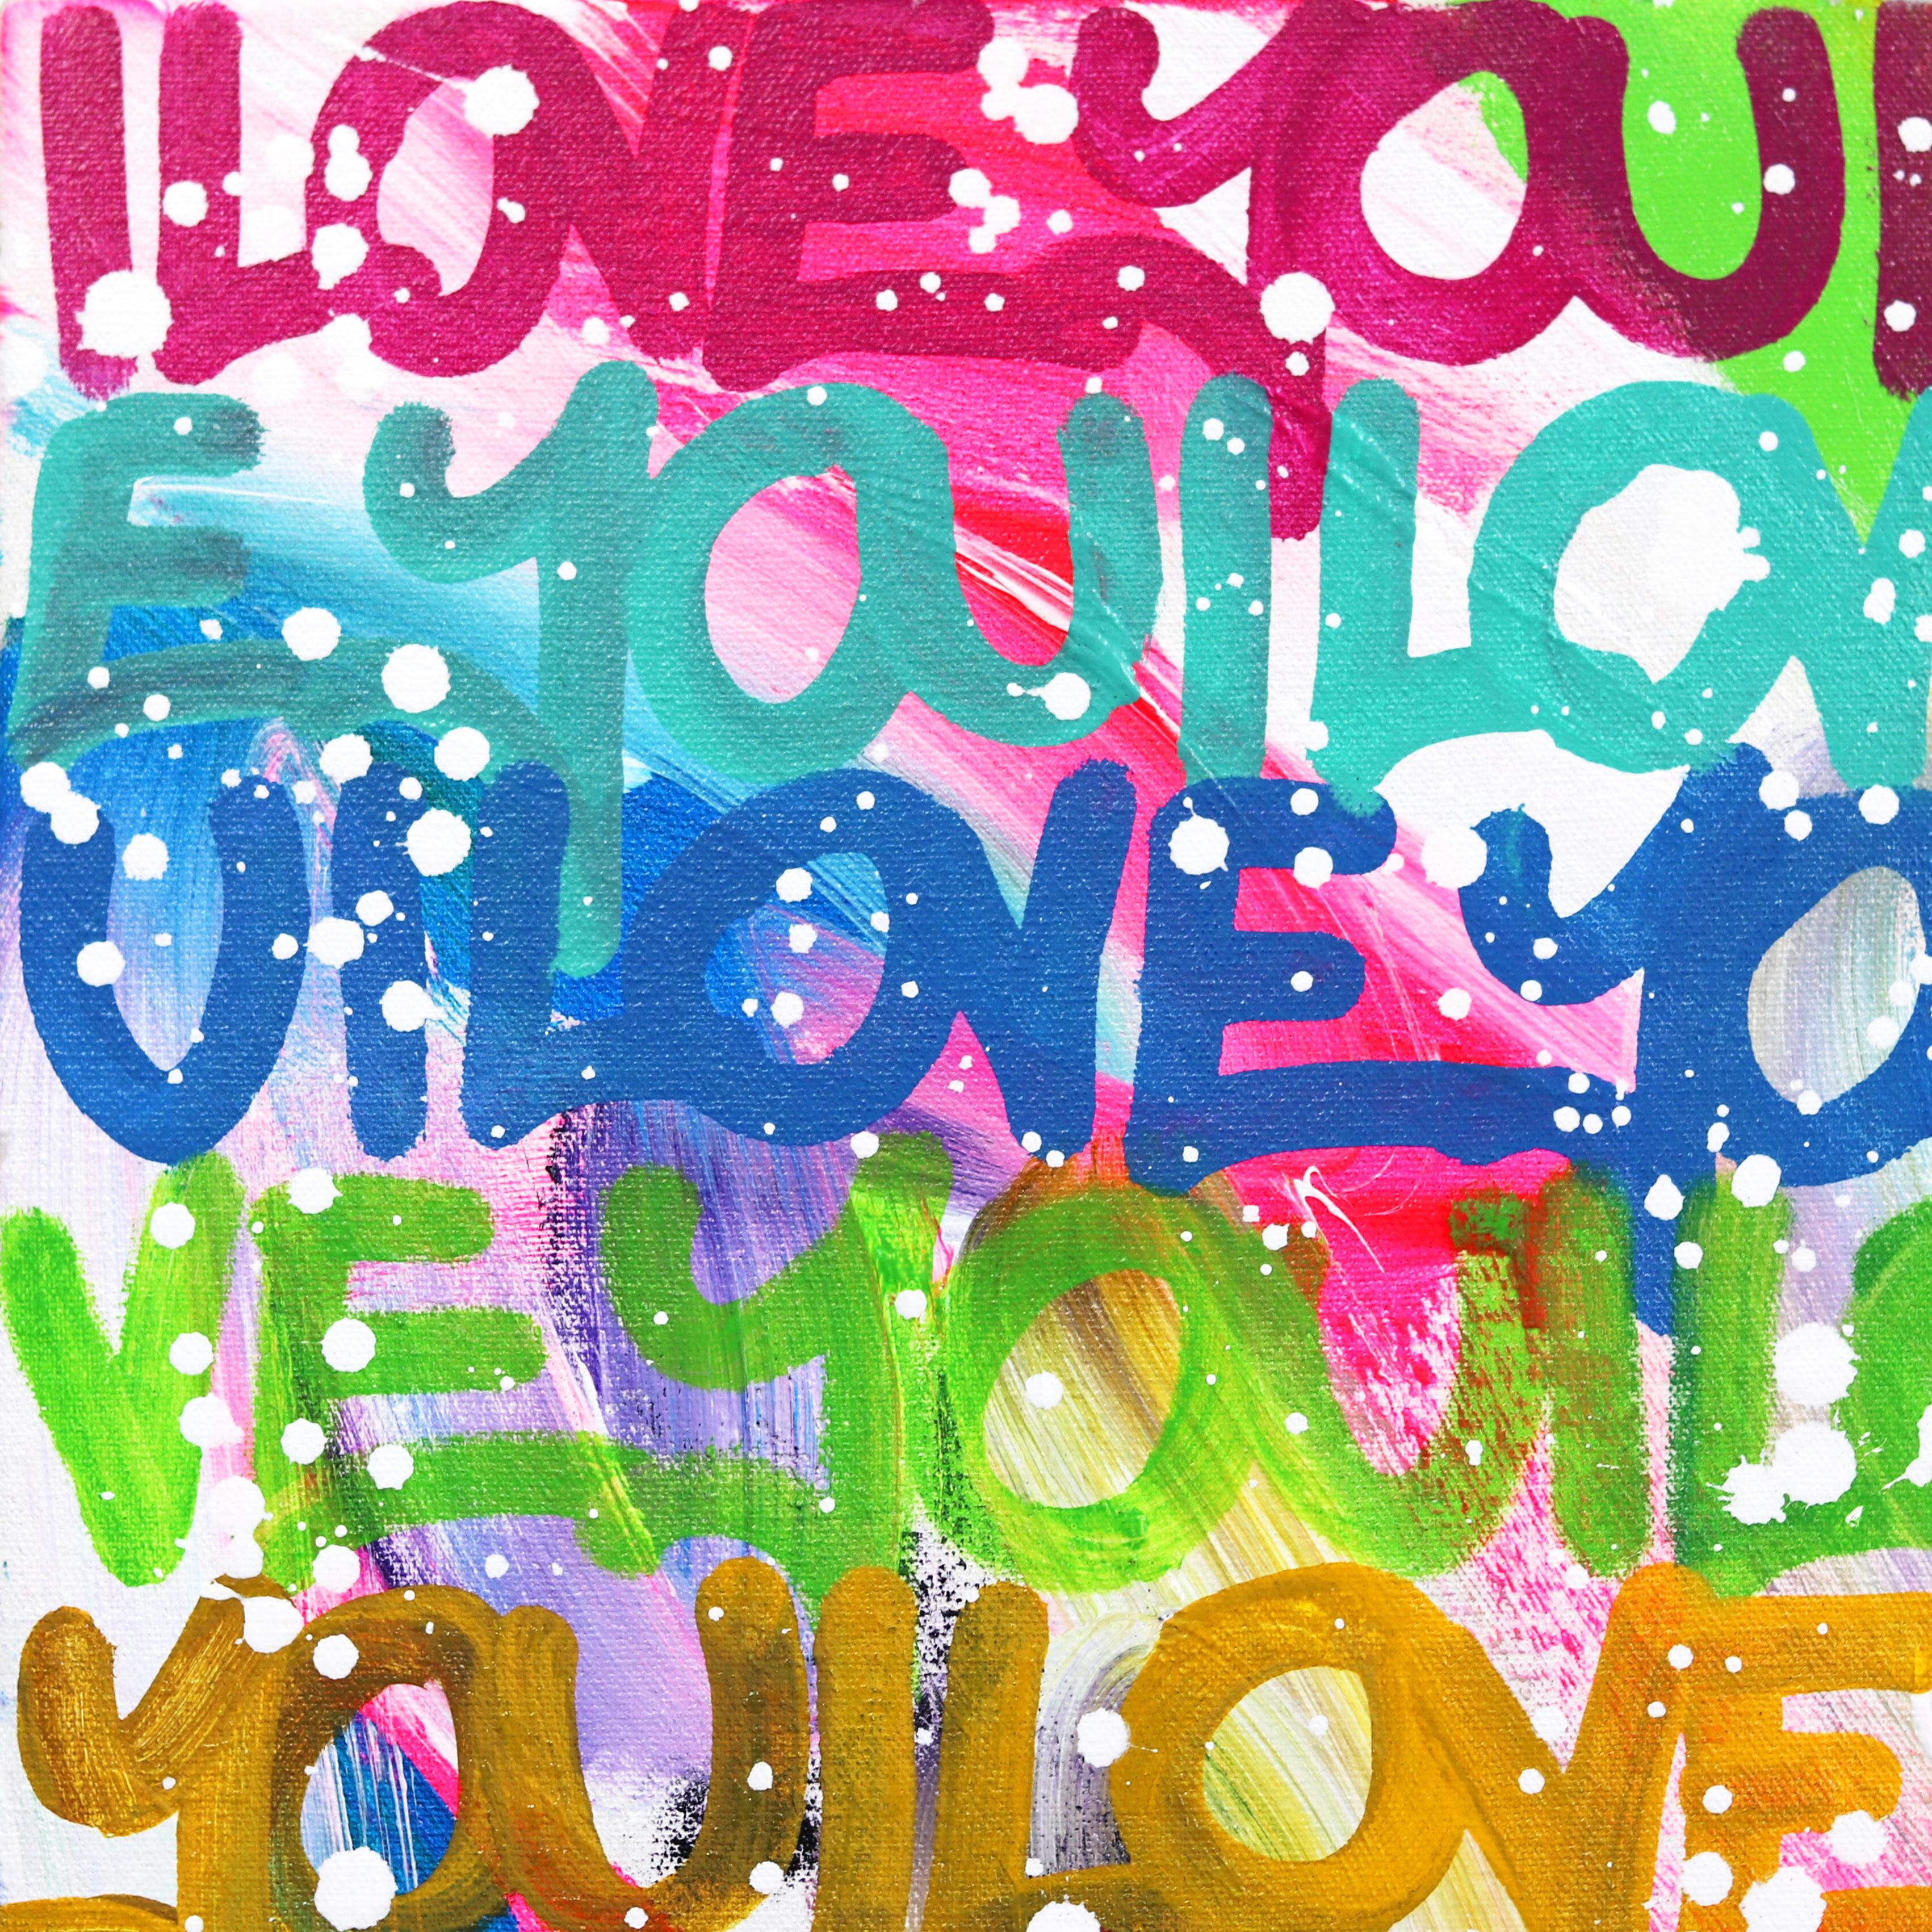 Show Your Colorful Side - Buntes Original Love Graffiti-Gemälde auf Leinwand (Streetart), Painting, von Amber Goldhammer